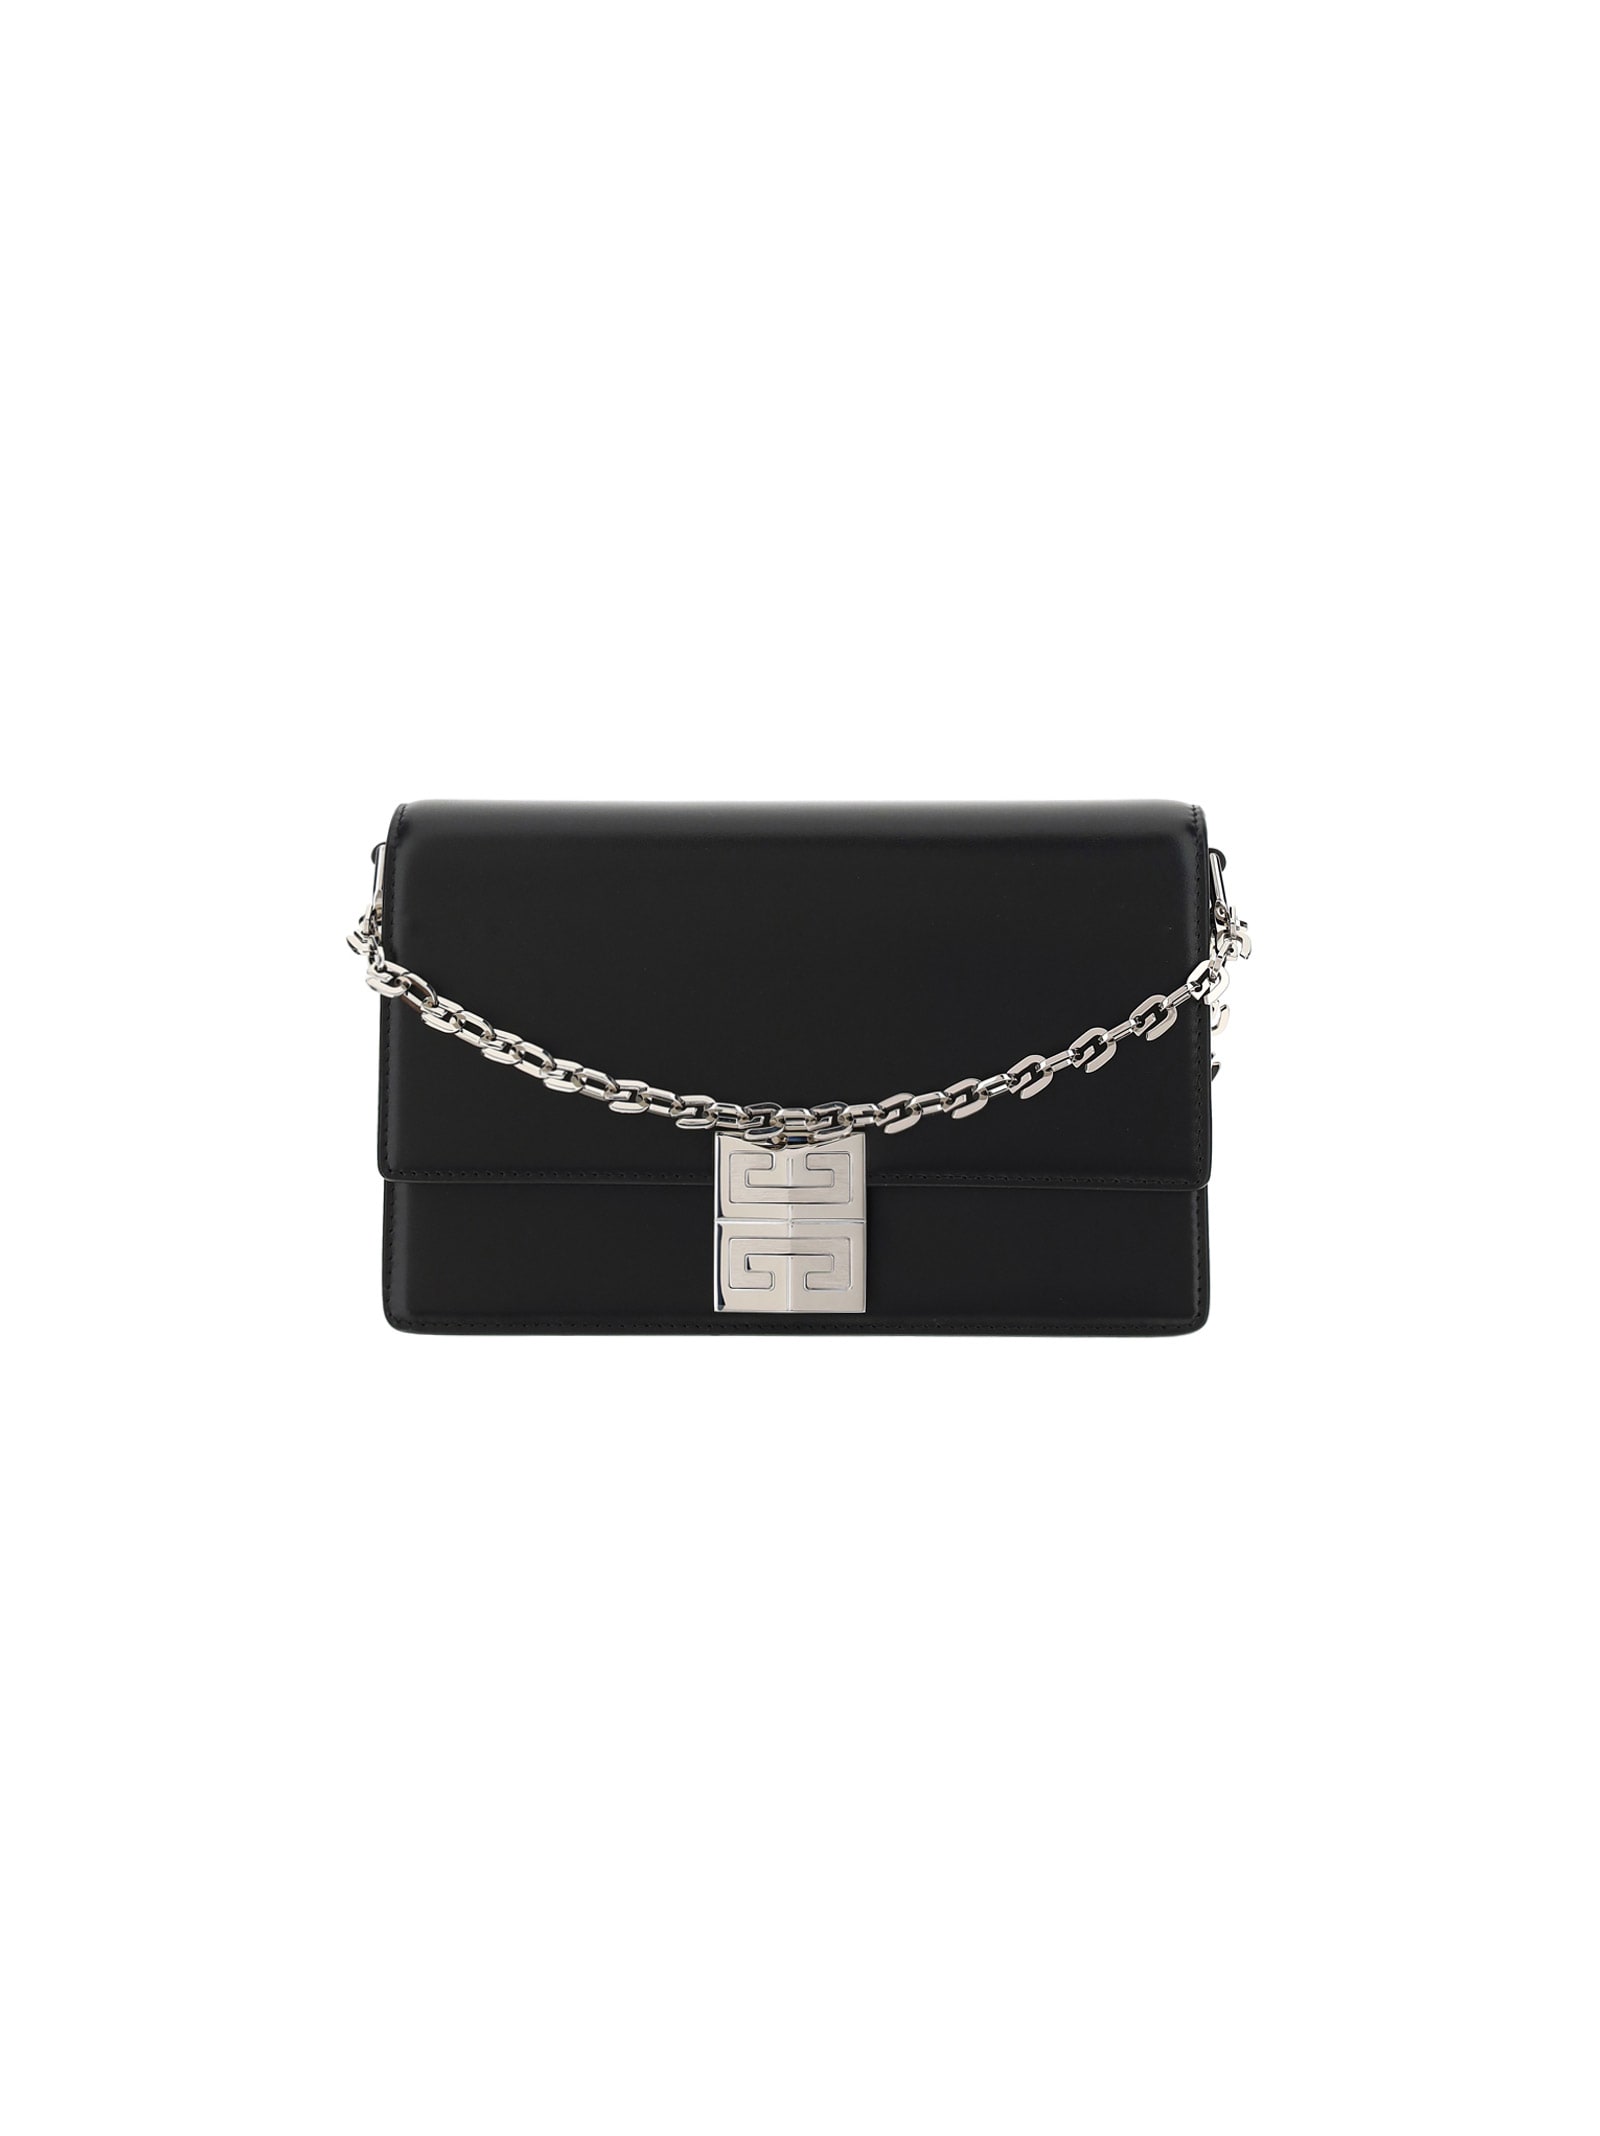 Givenchy Mini Chain Bag In Black